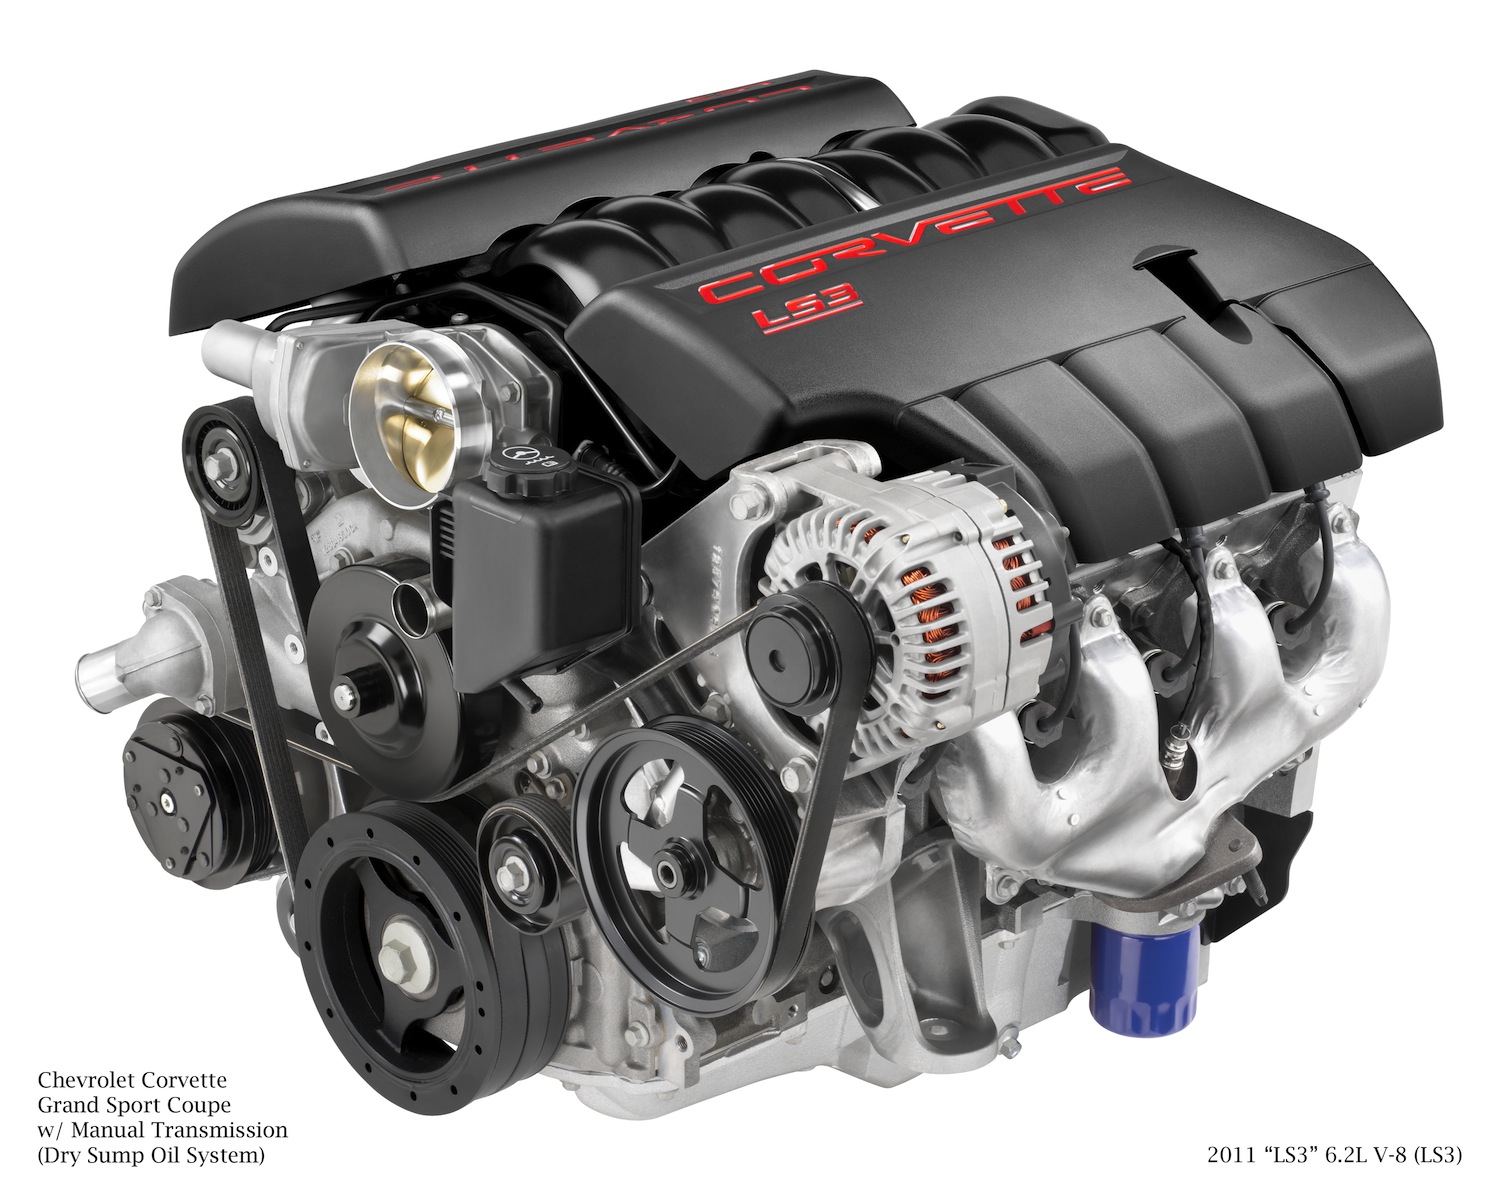 2011 "LS3" 6.2L V-8 (LS3) for Chevrolet Corvette Grand Sport Coupe w/Manual Transmission (Dry Sump Oil System).